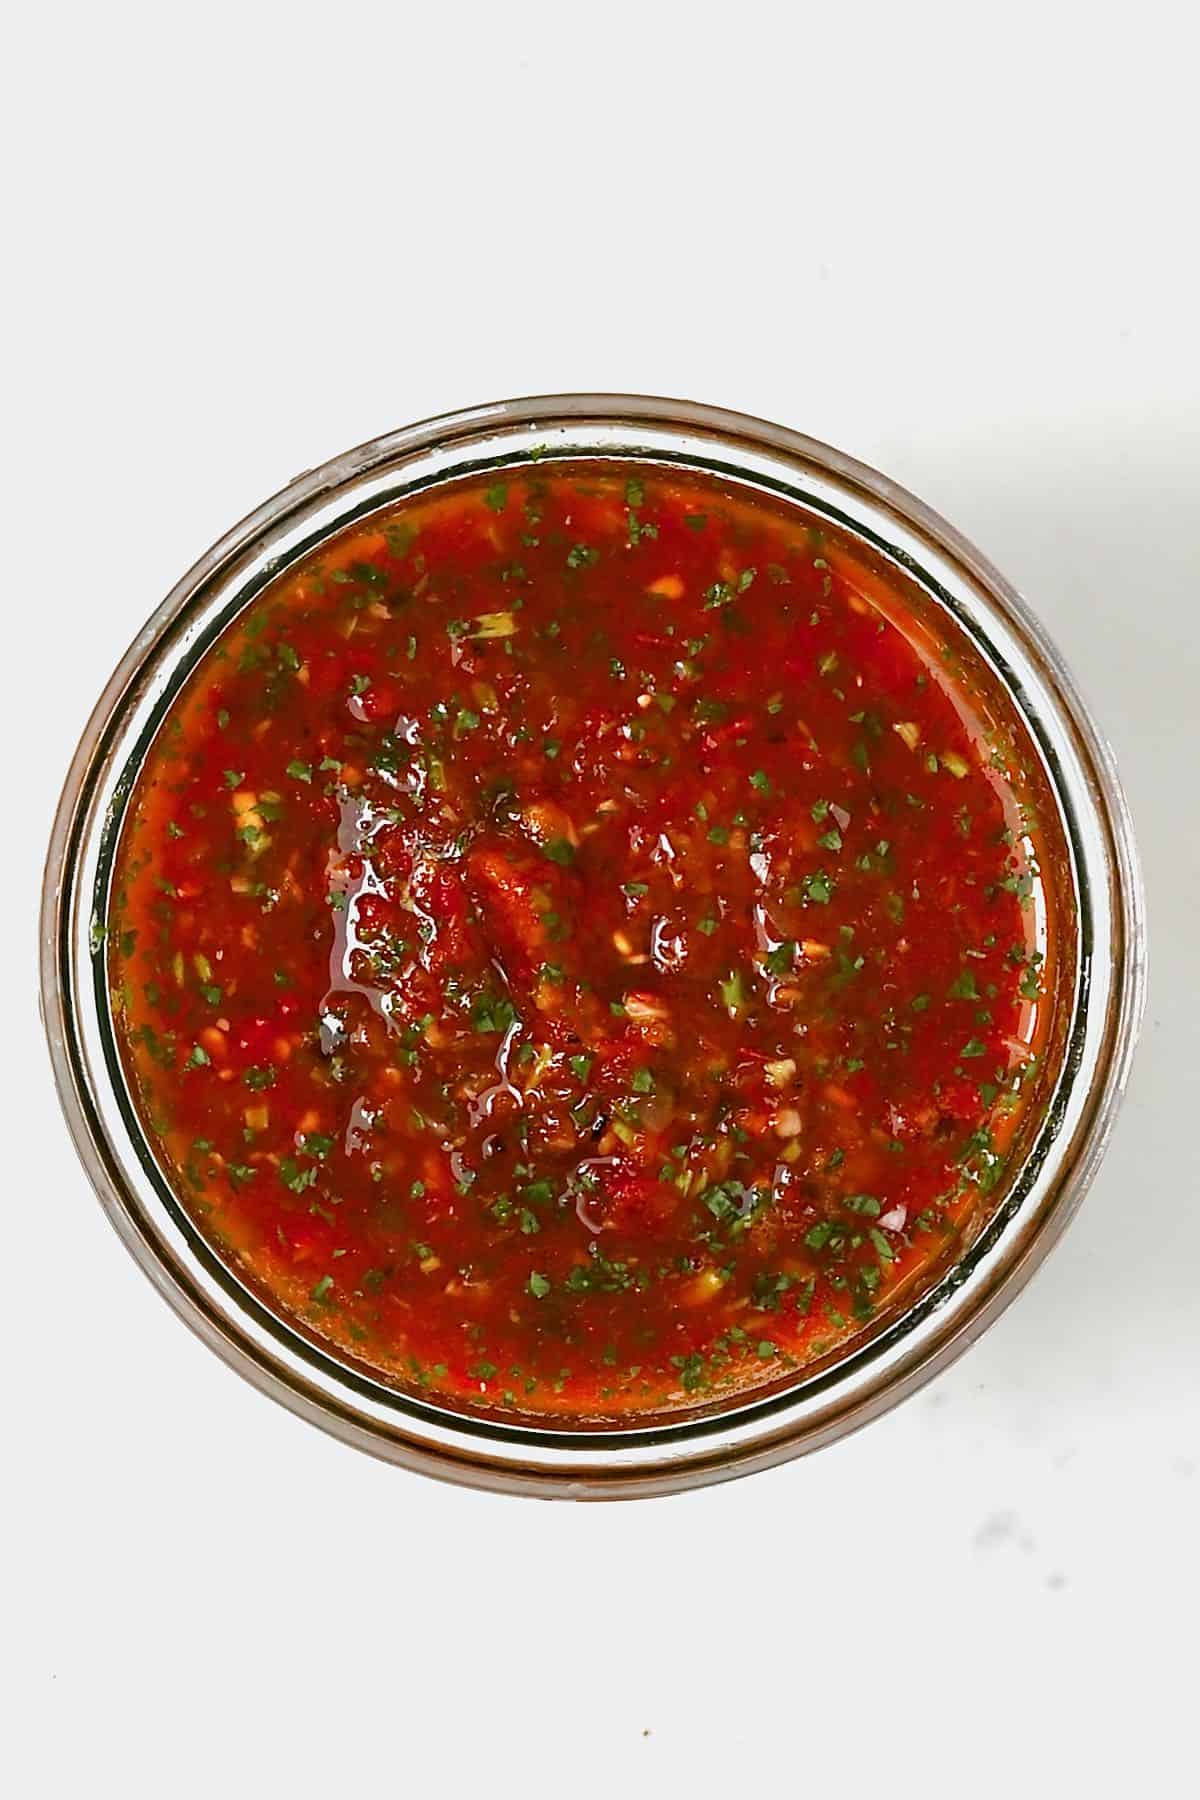 https://www.alphafoodie.com/wp-content/uploads/2021/08/roasted-tomato-salsa-Main1.jpeg